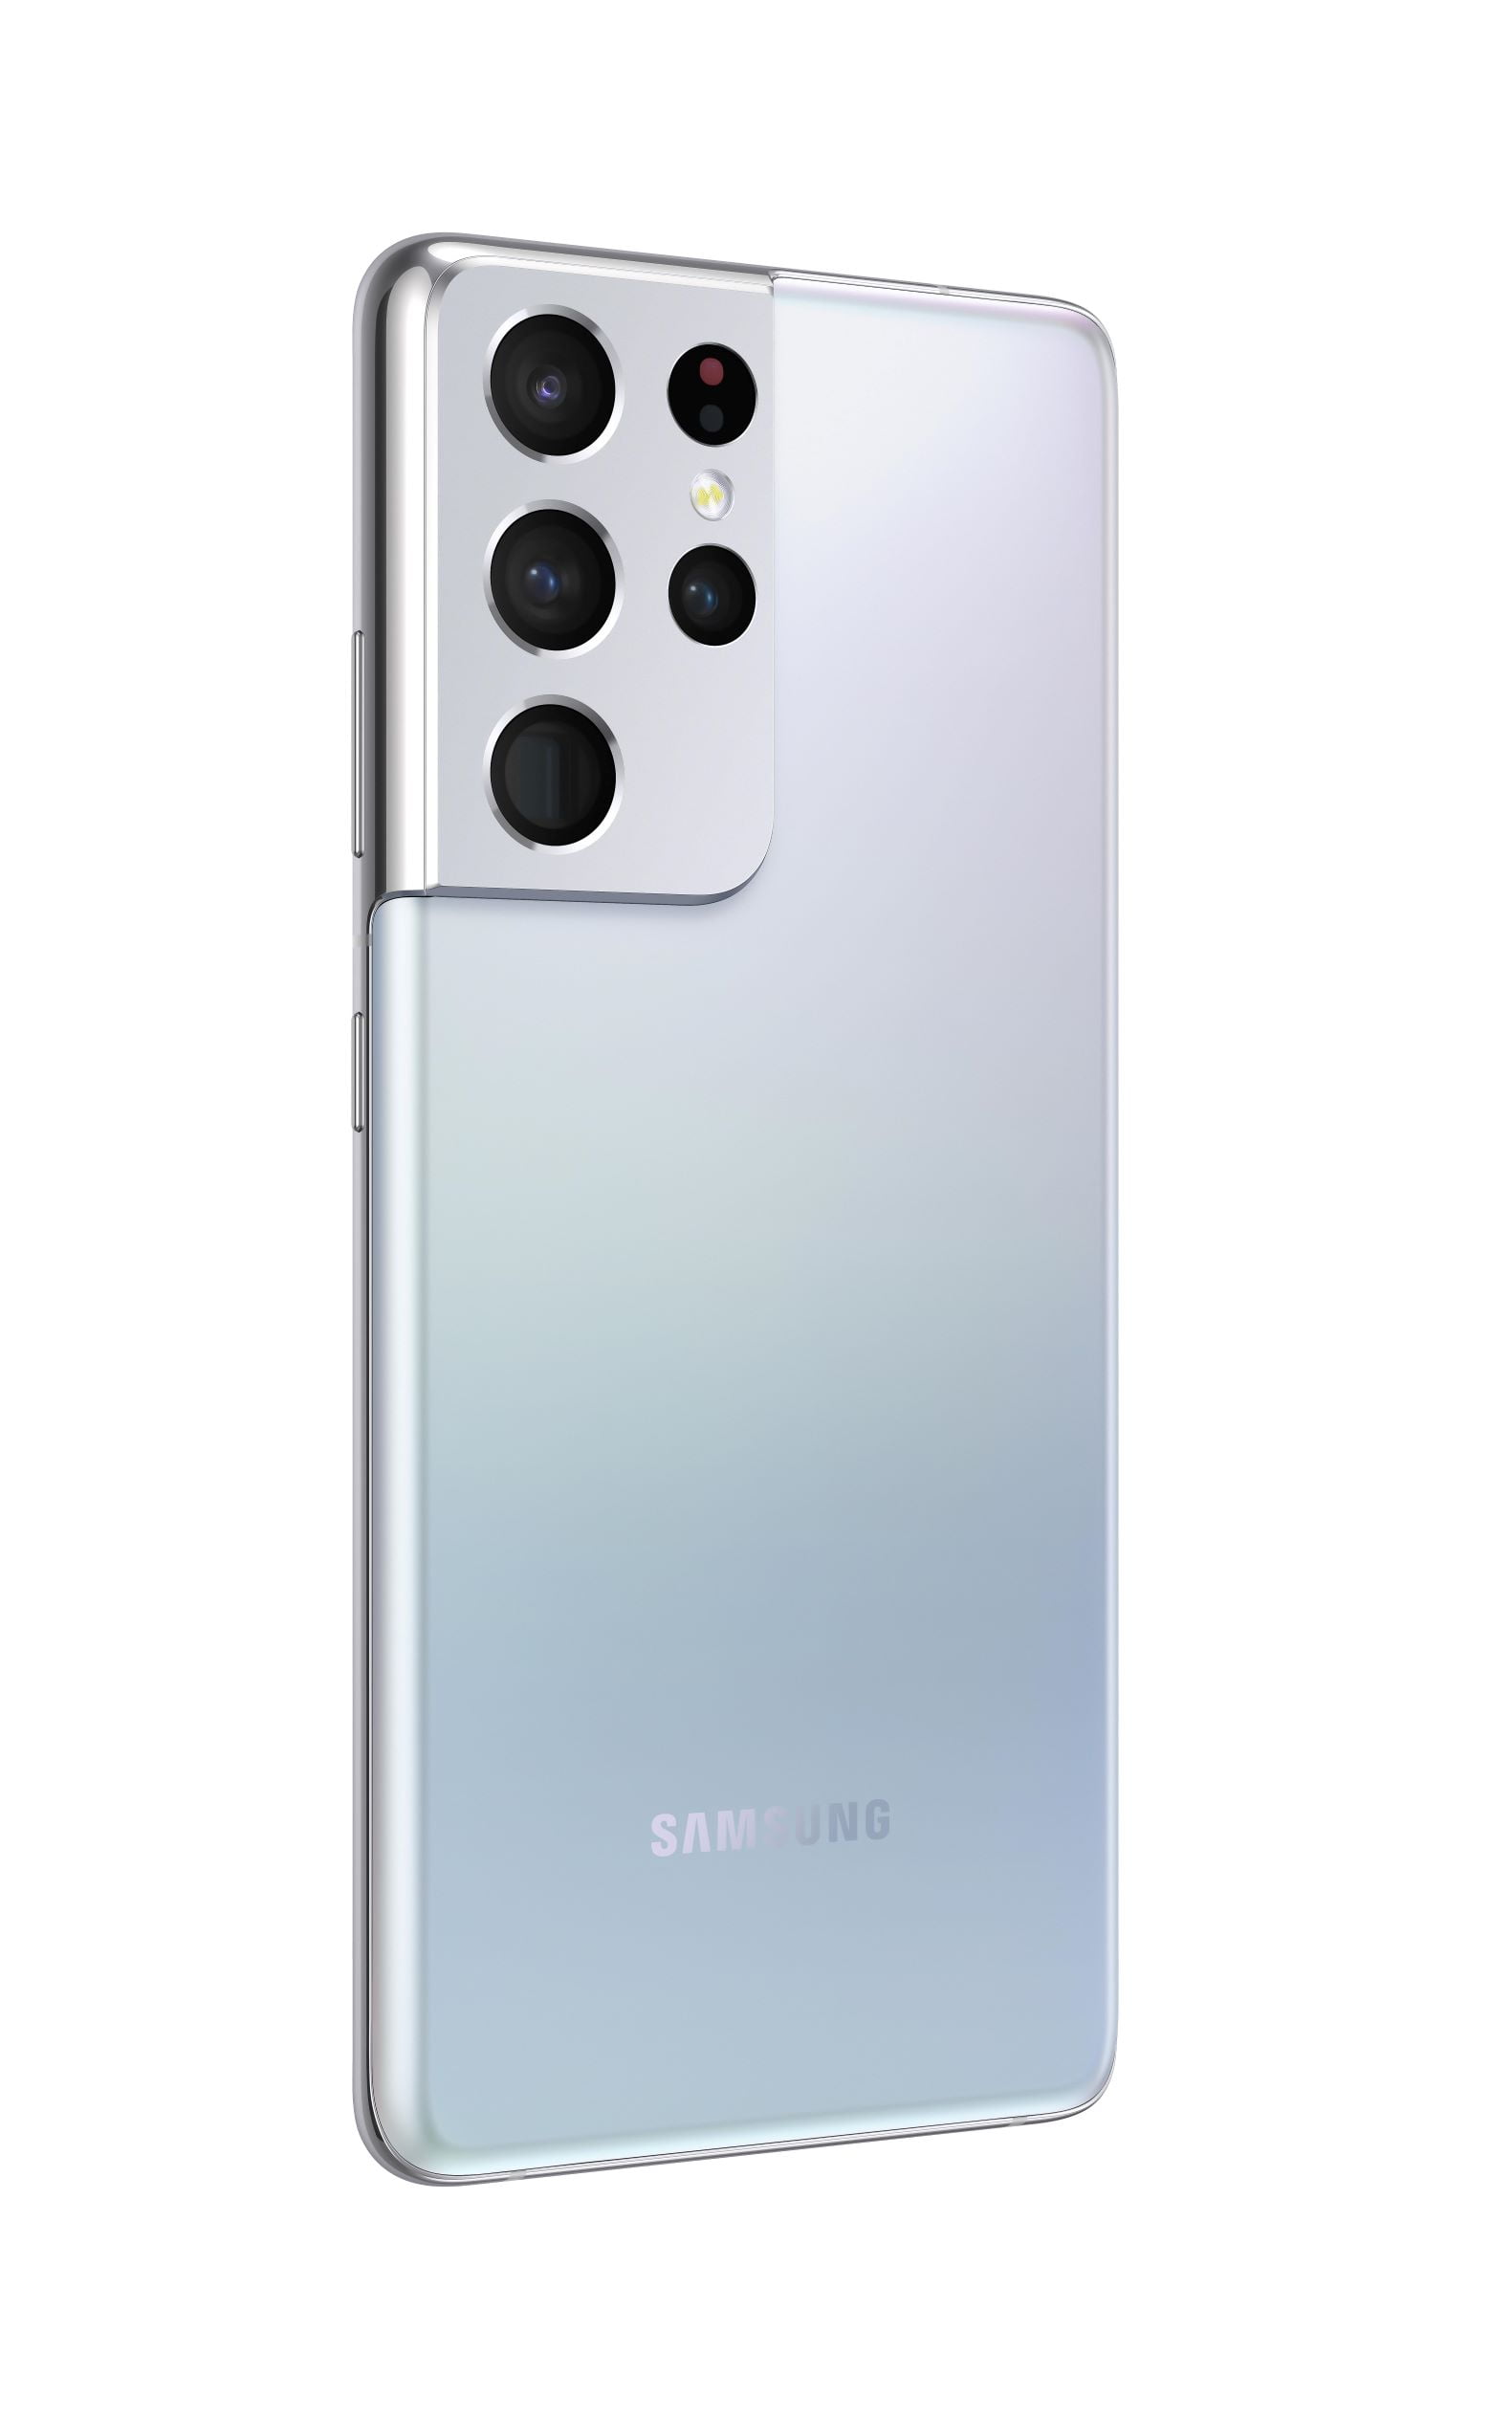 Samsung Galaxy S21 Ultra 256gb Unlock $769 Cash Like New for